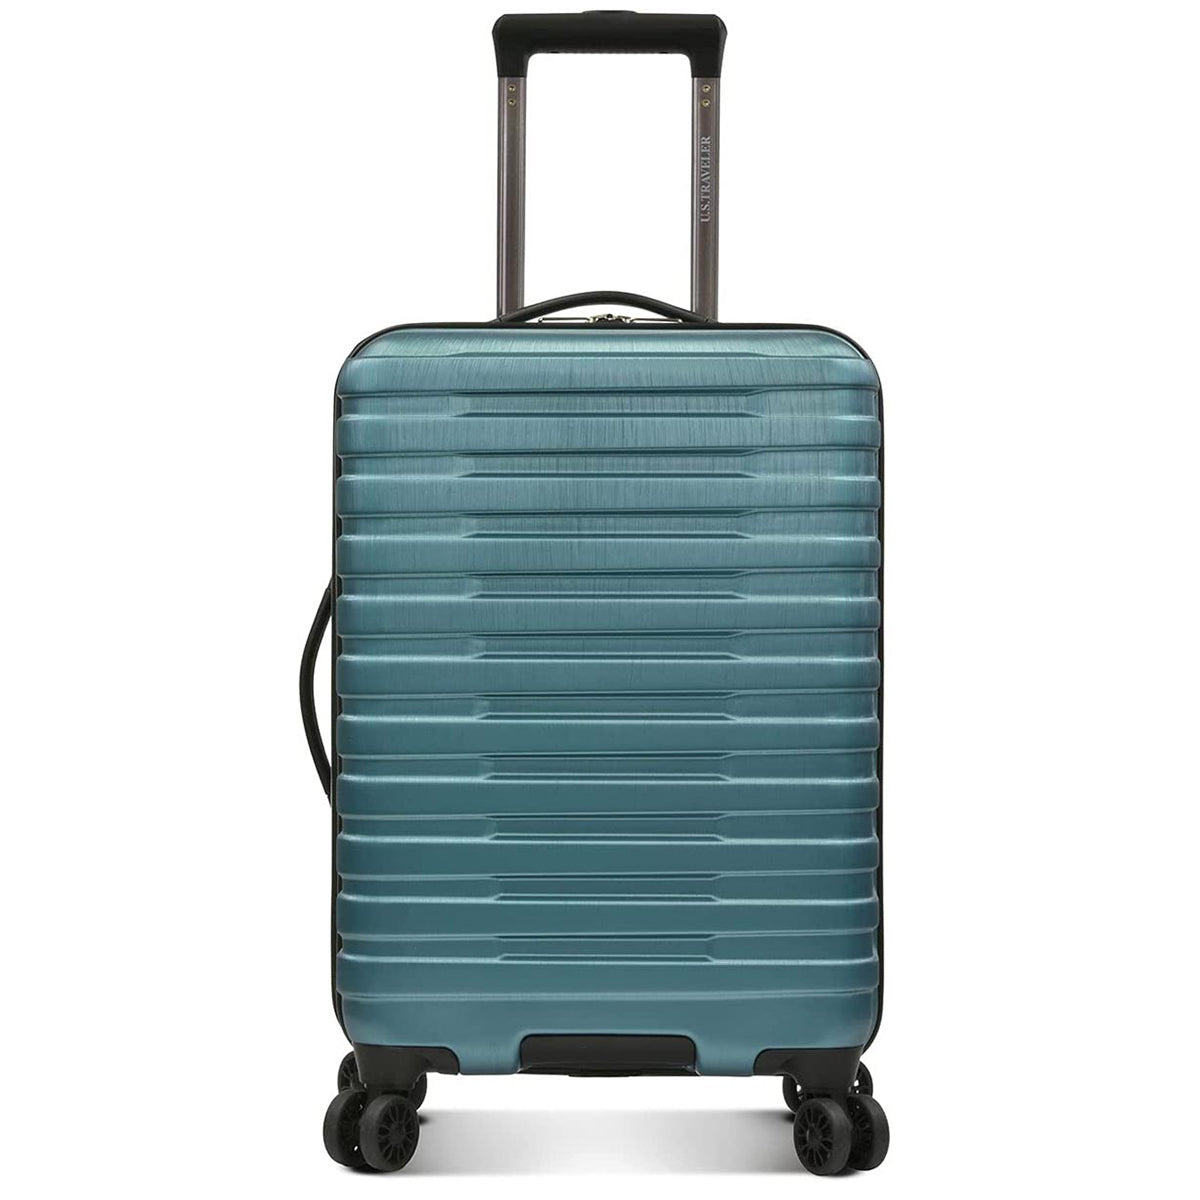  U.S. Traveler Boren Hardside Spinner Luggage With Aluminum Handle, Carry-on